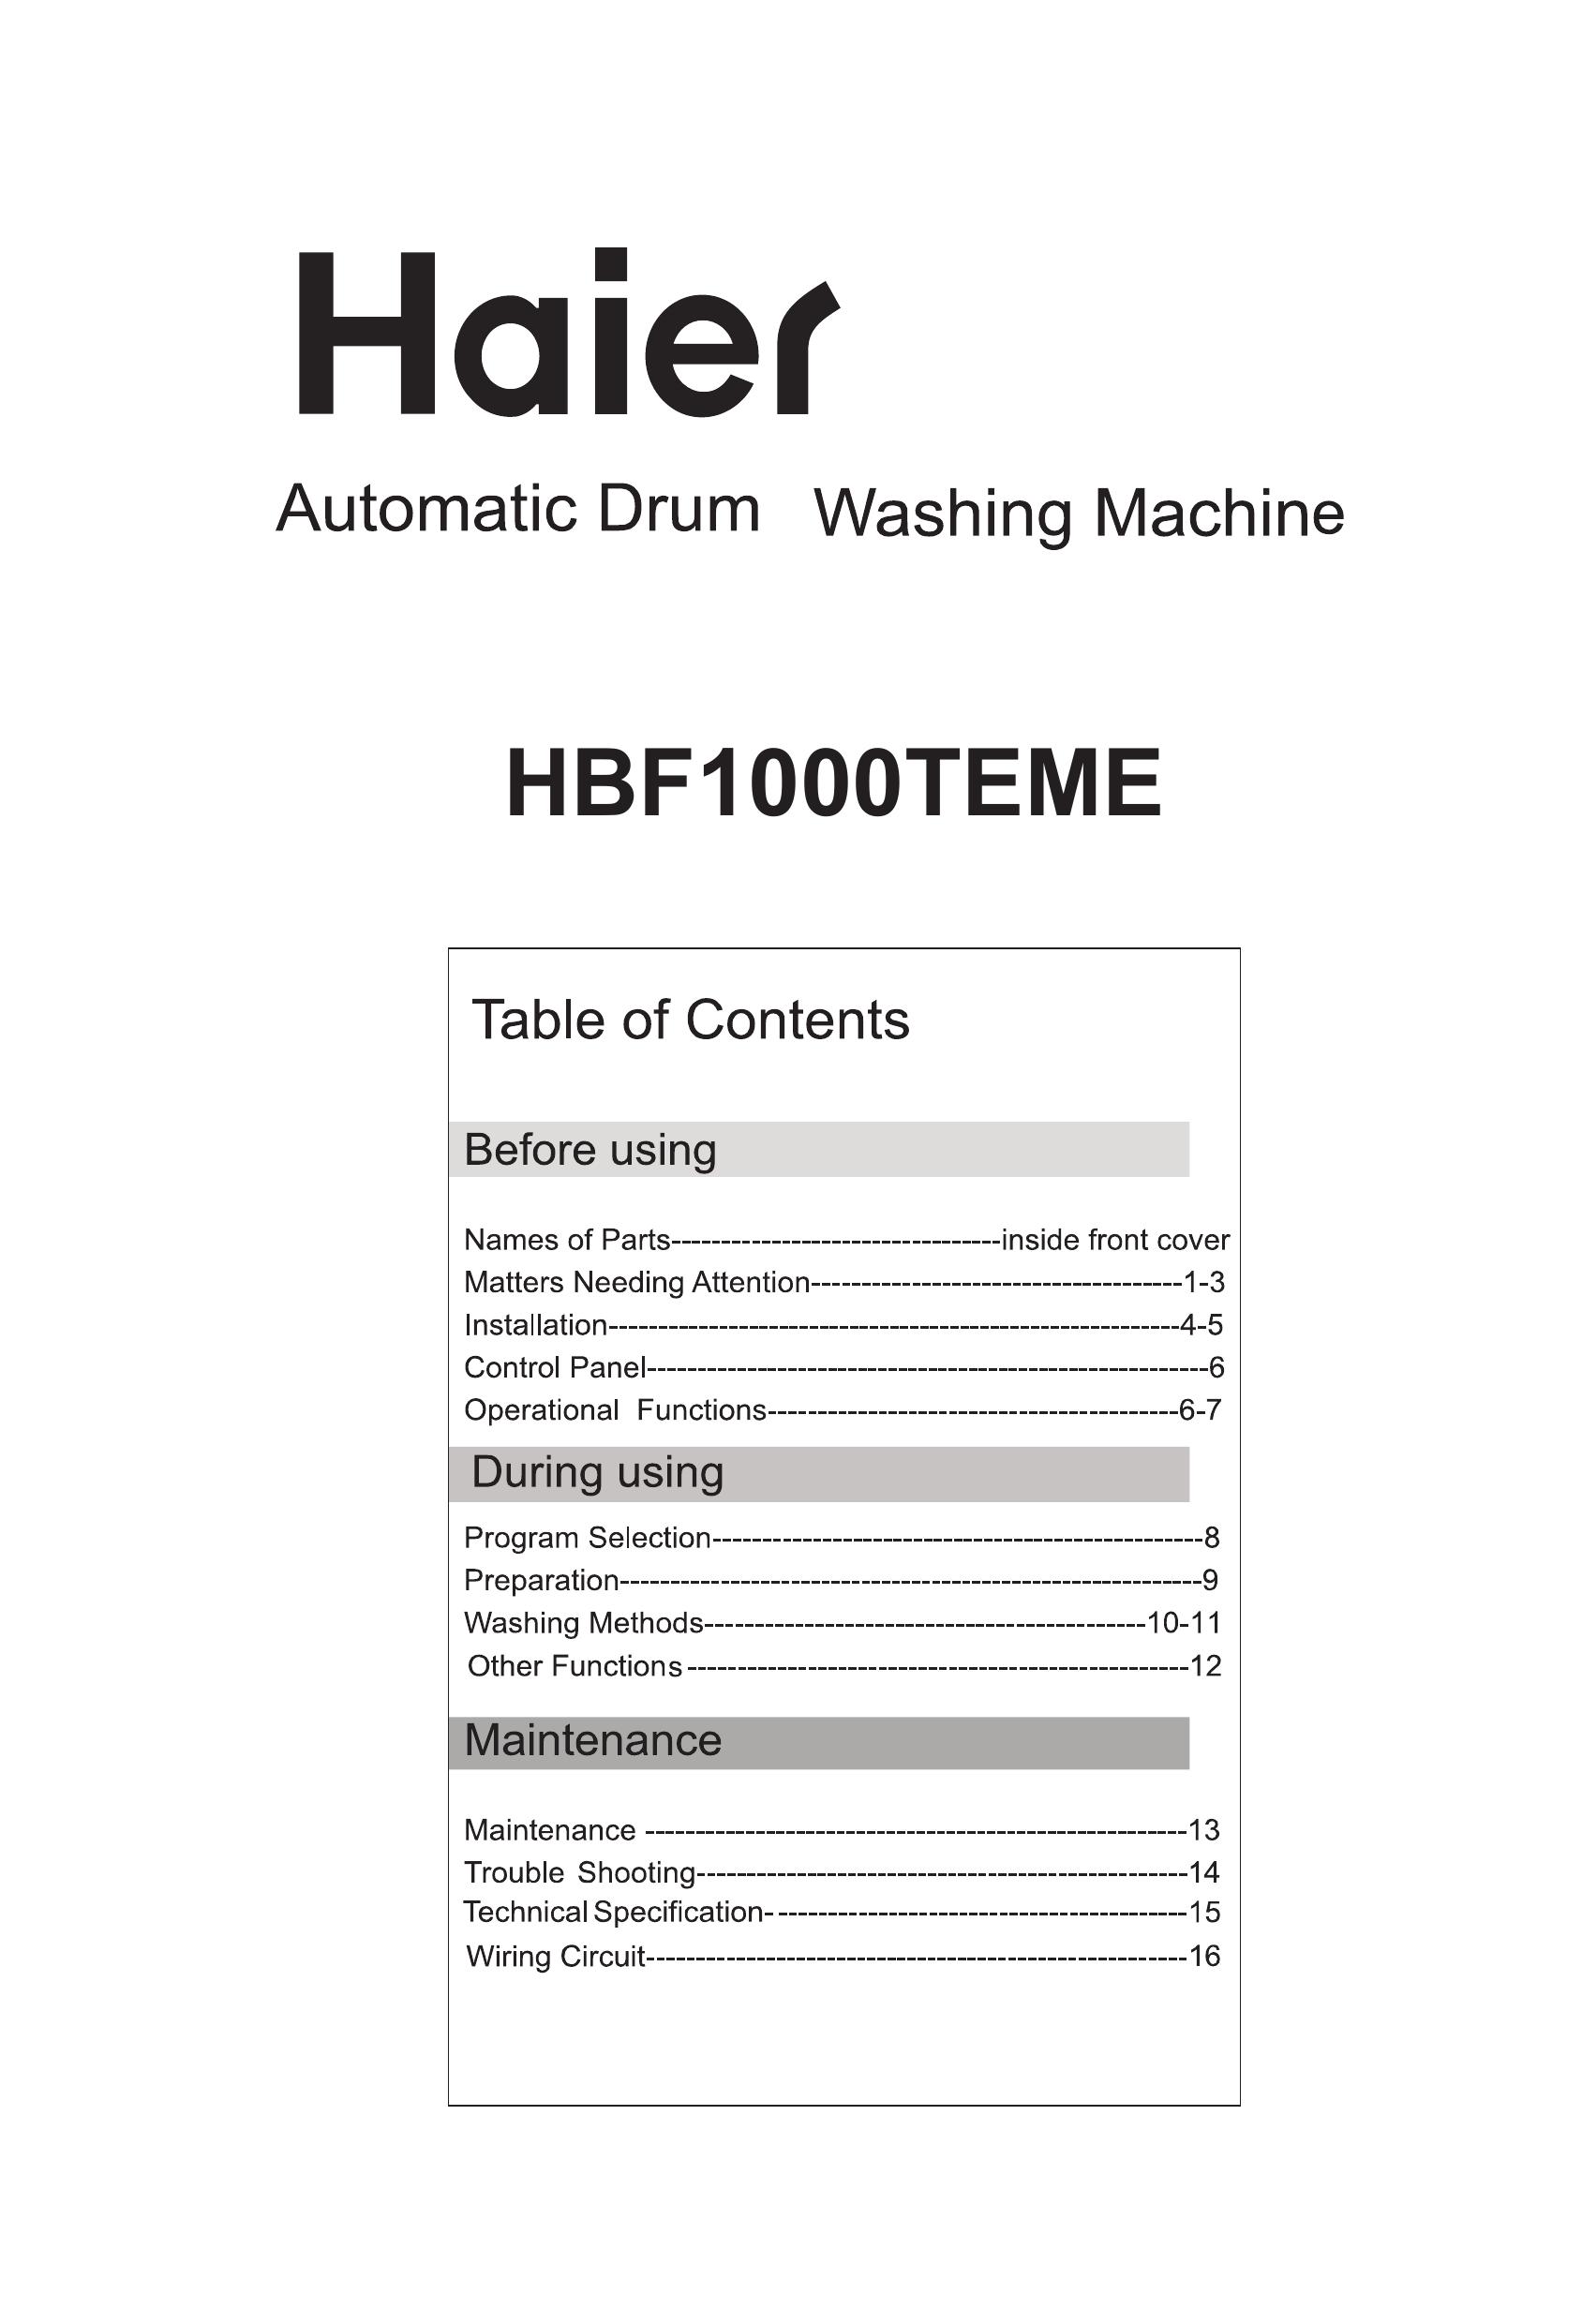 Haier HBF1000TEME Washer User Manual